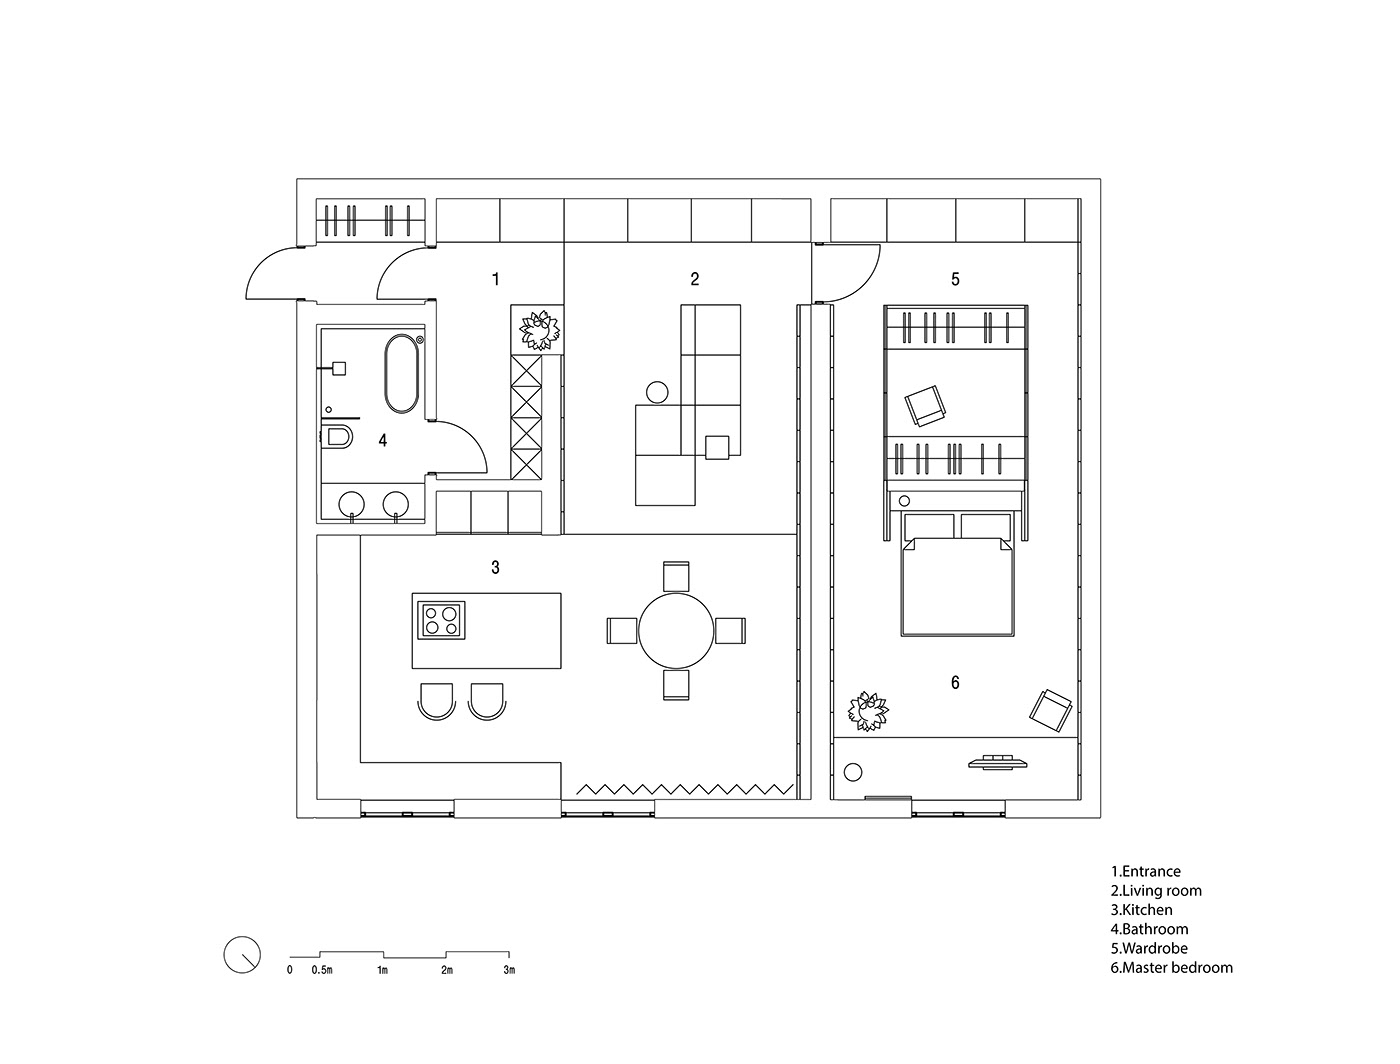 flat 3ds max SketchUP wood Terrazzo Marble interior design  Minimalism bathroom livingroom